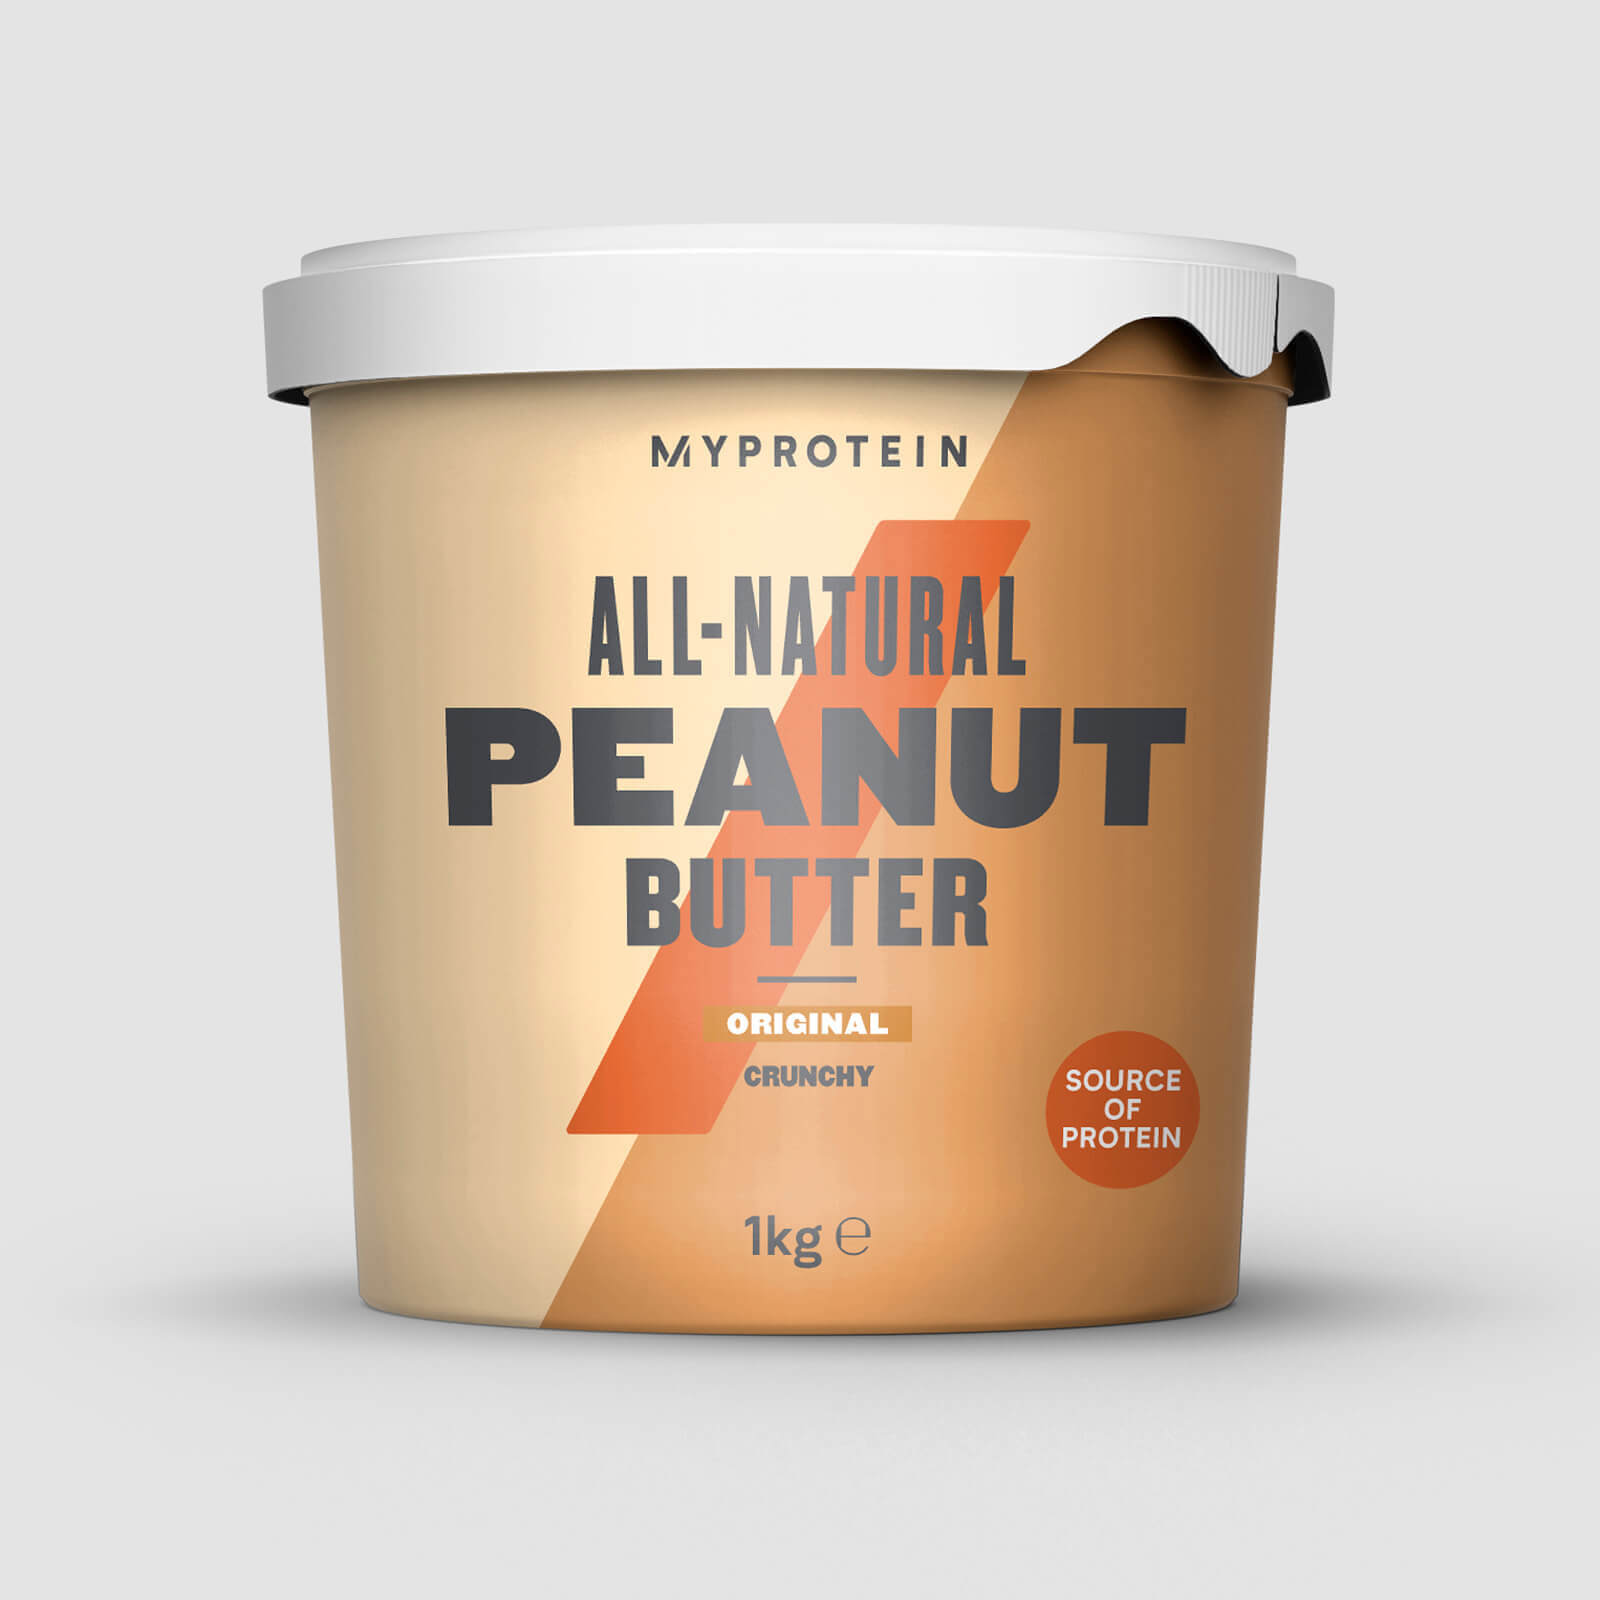 All-Natural Peanut Butter - Crunchy